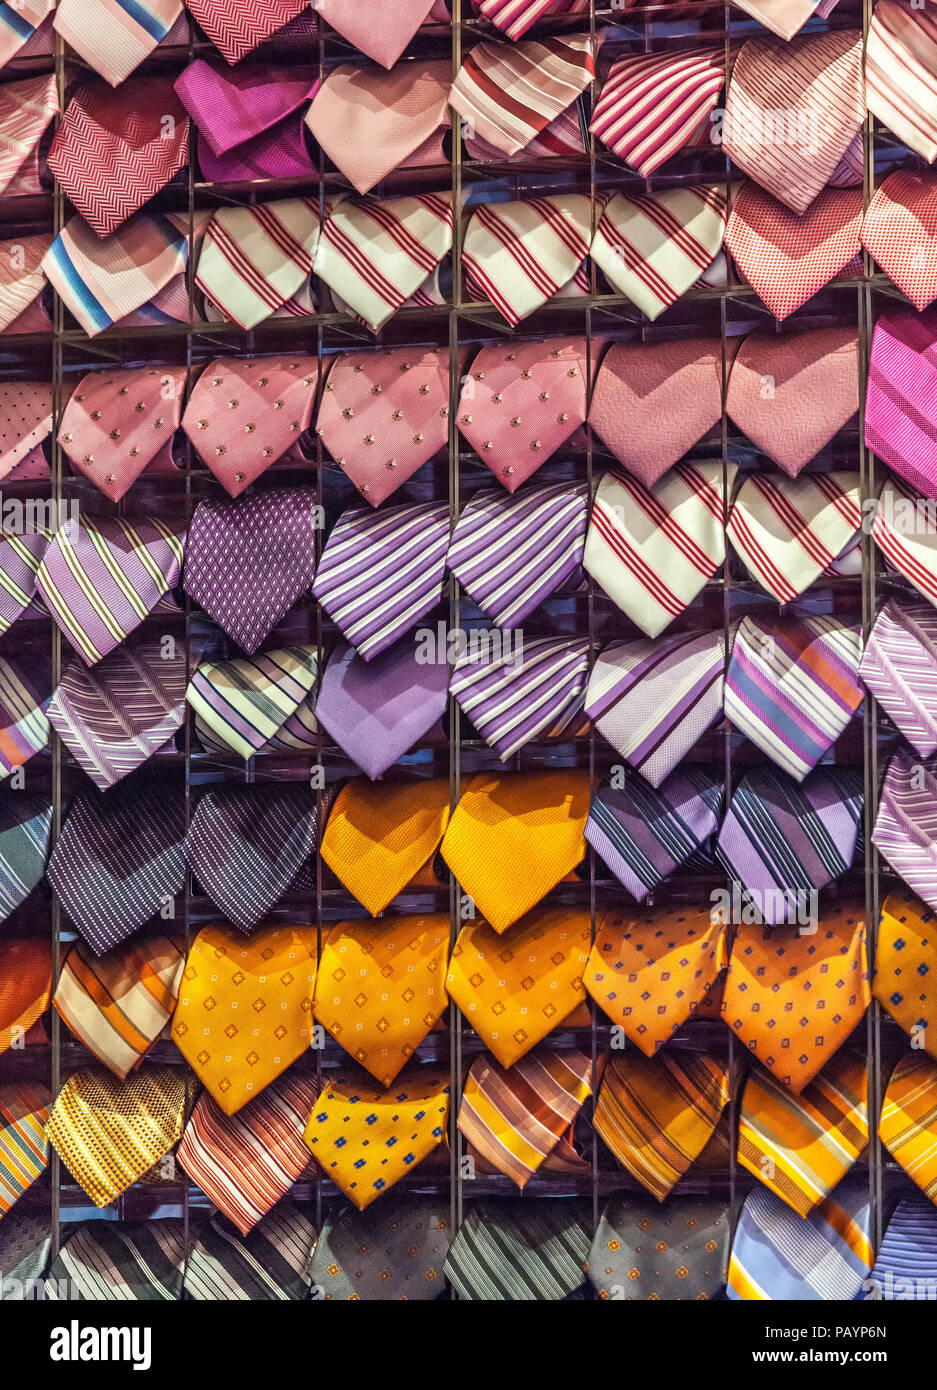 Roma, cravatte shop Foto stock - Alamy